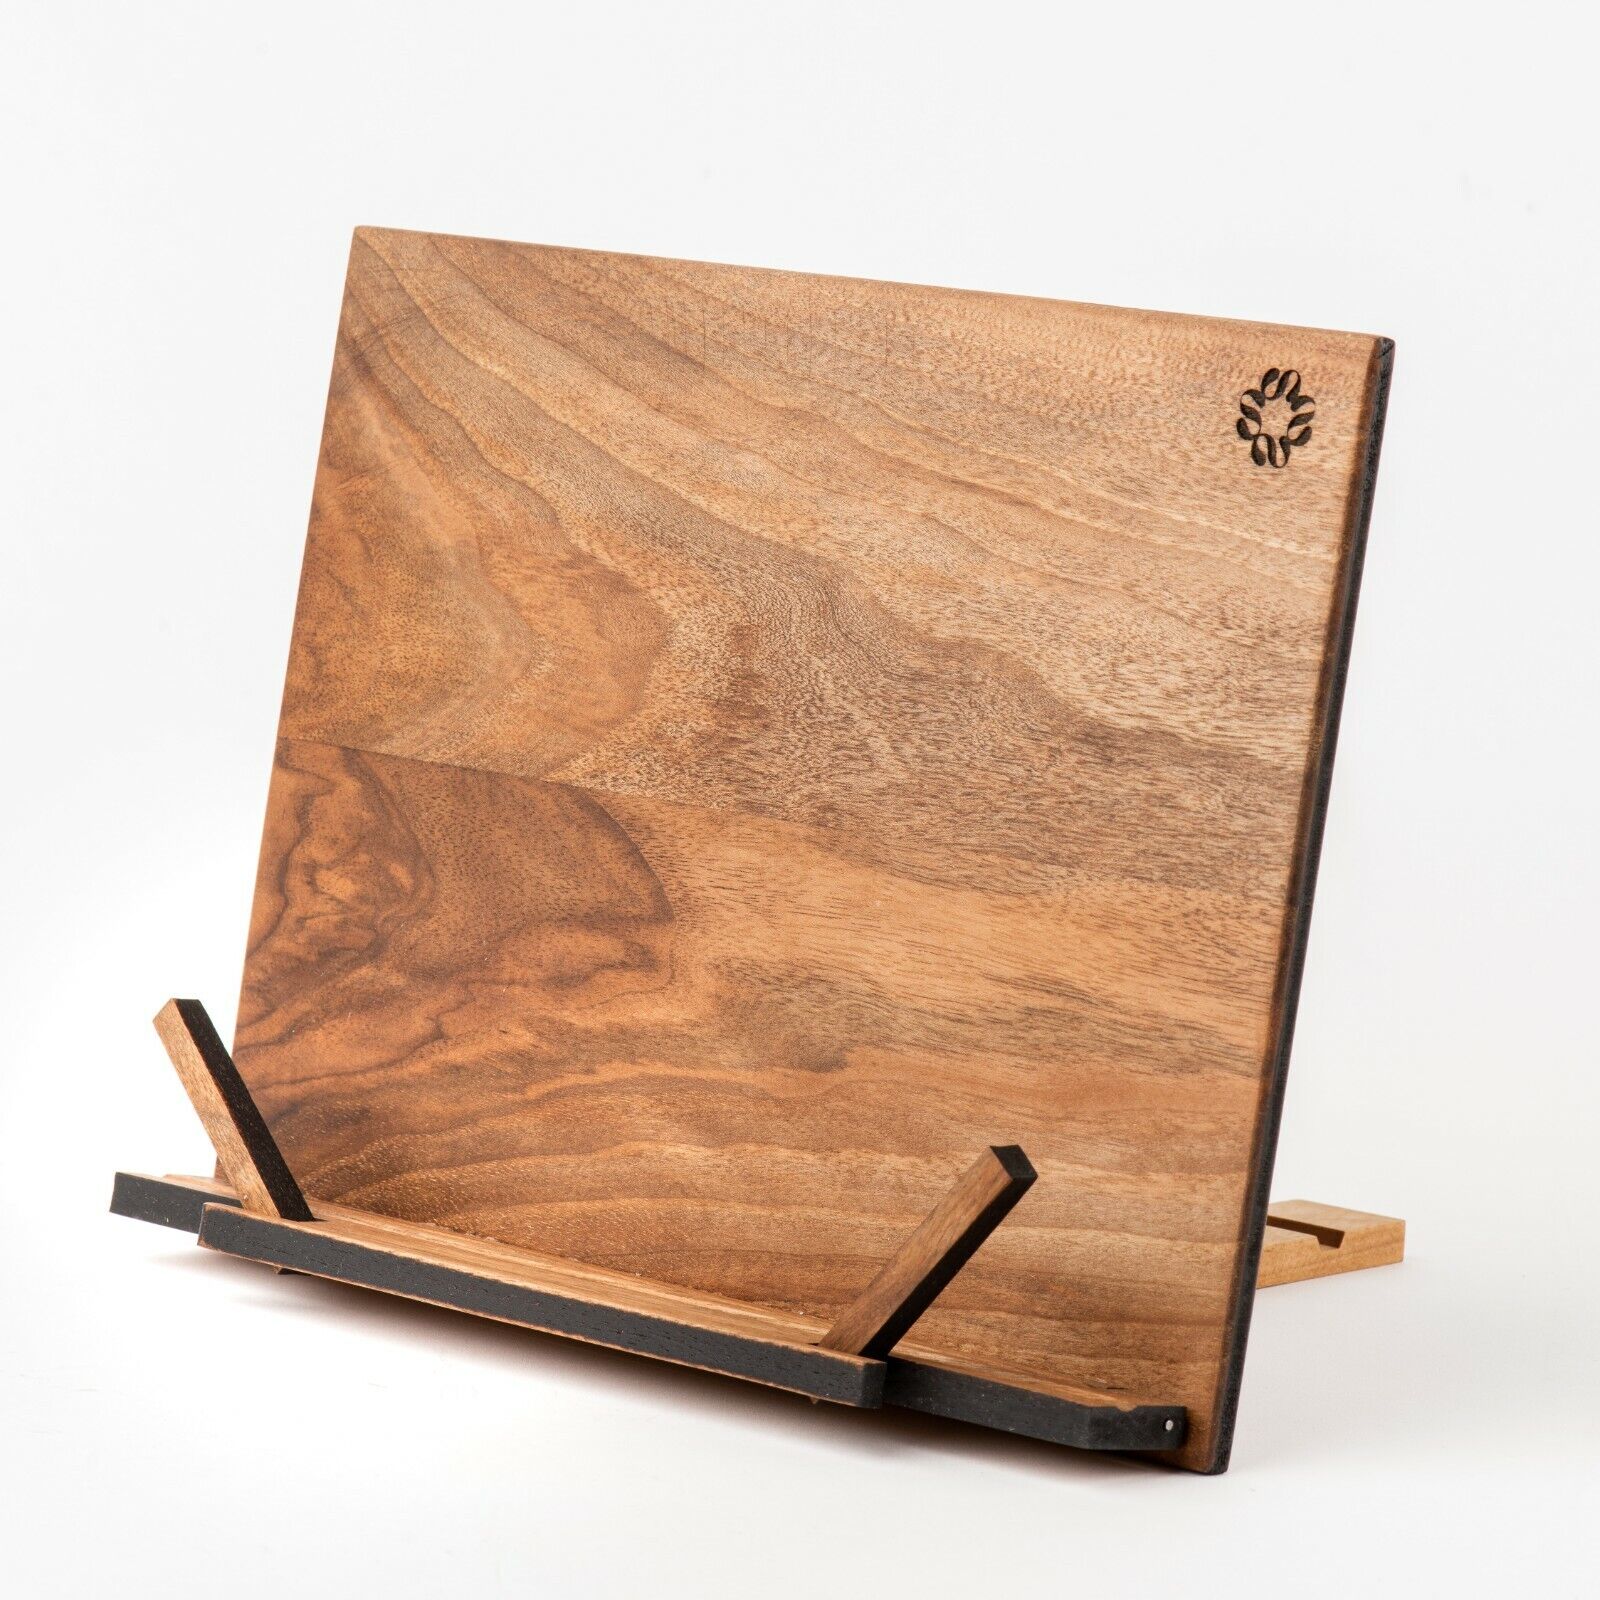 TILISMA Handmade Wooden Book Stand - Walnut Tablet Holder for Reading Hands Free